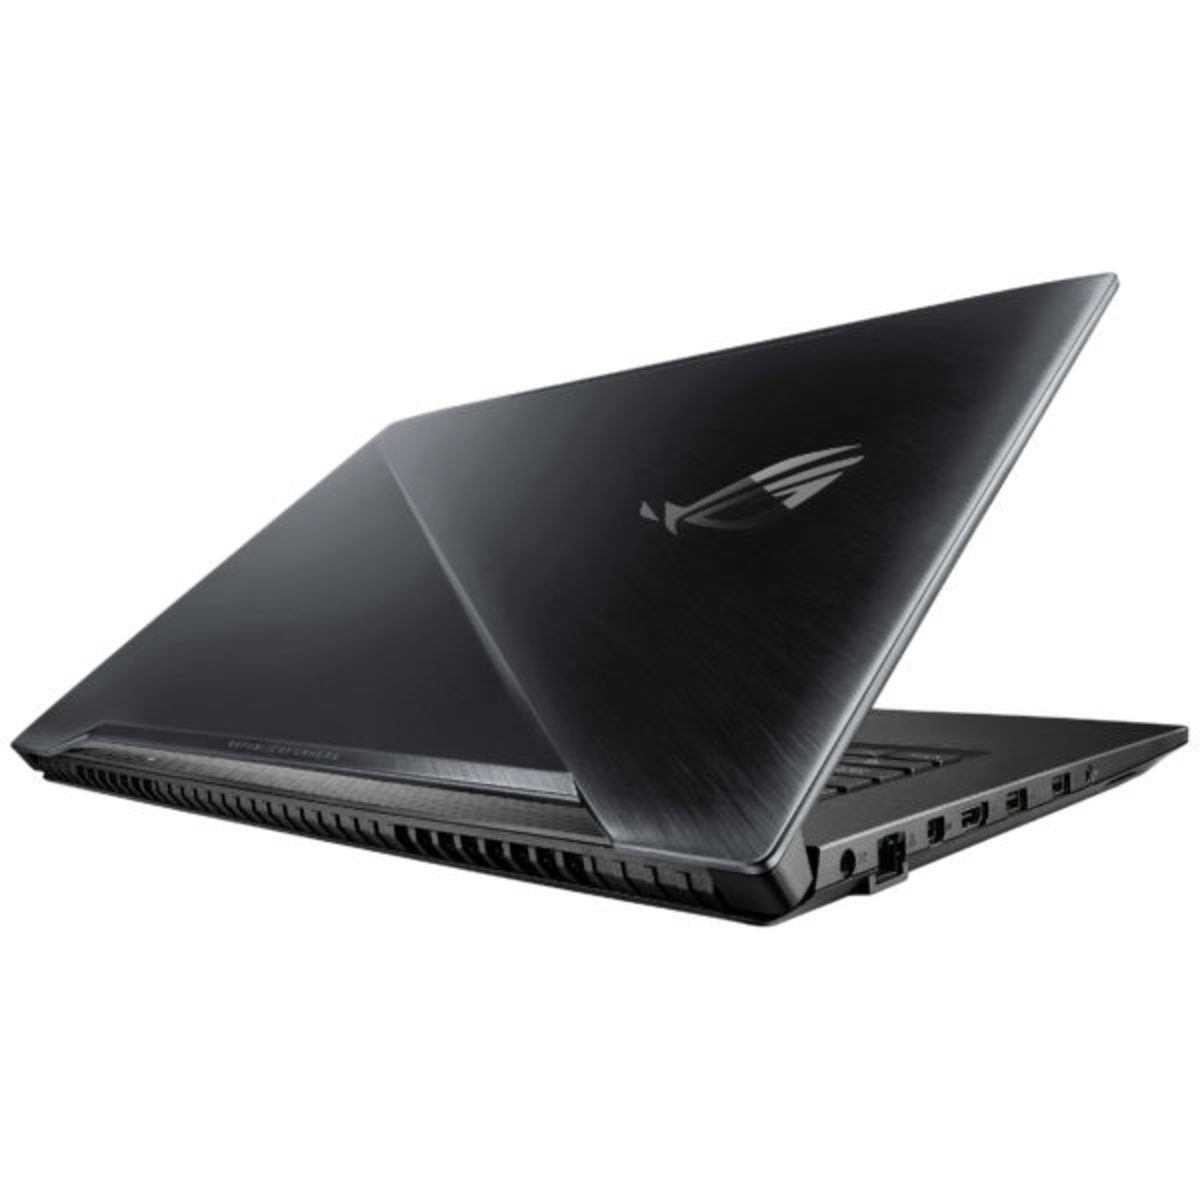 Asus Gaming Laptop Rog Strix GL703GM-E5055T Core i7 Black